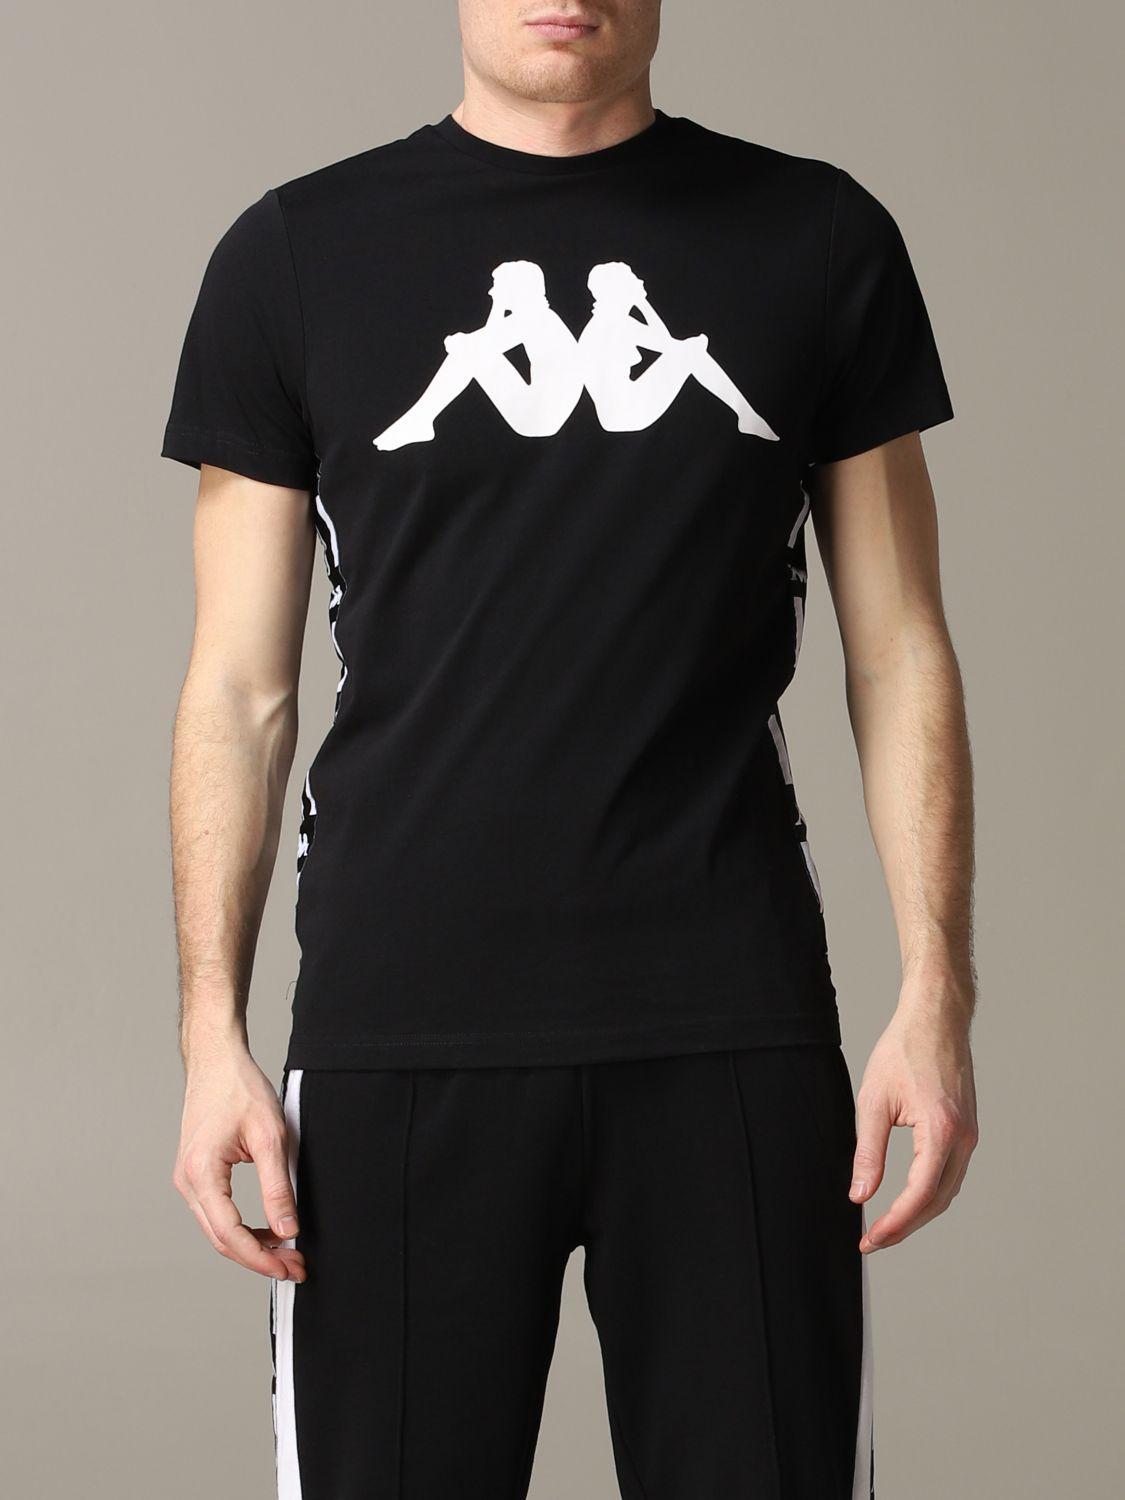 Kappa T-shirt in Black for Men - Lyst